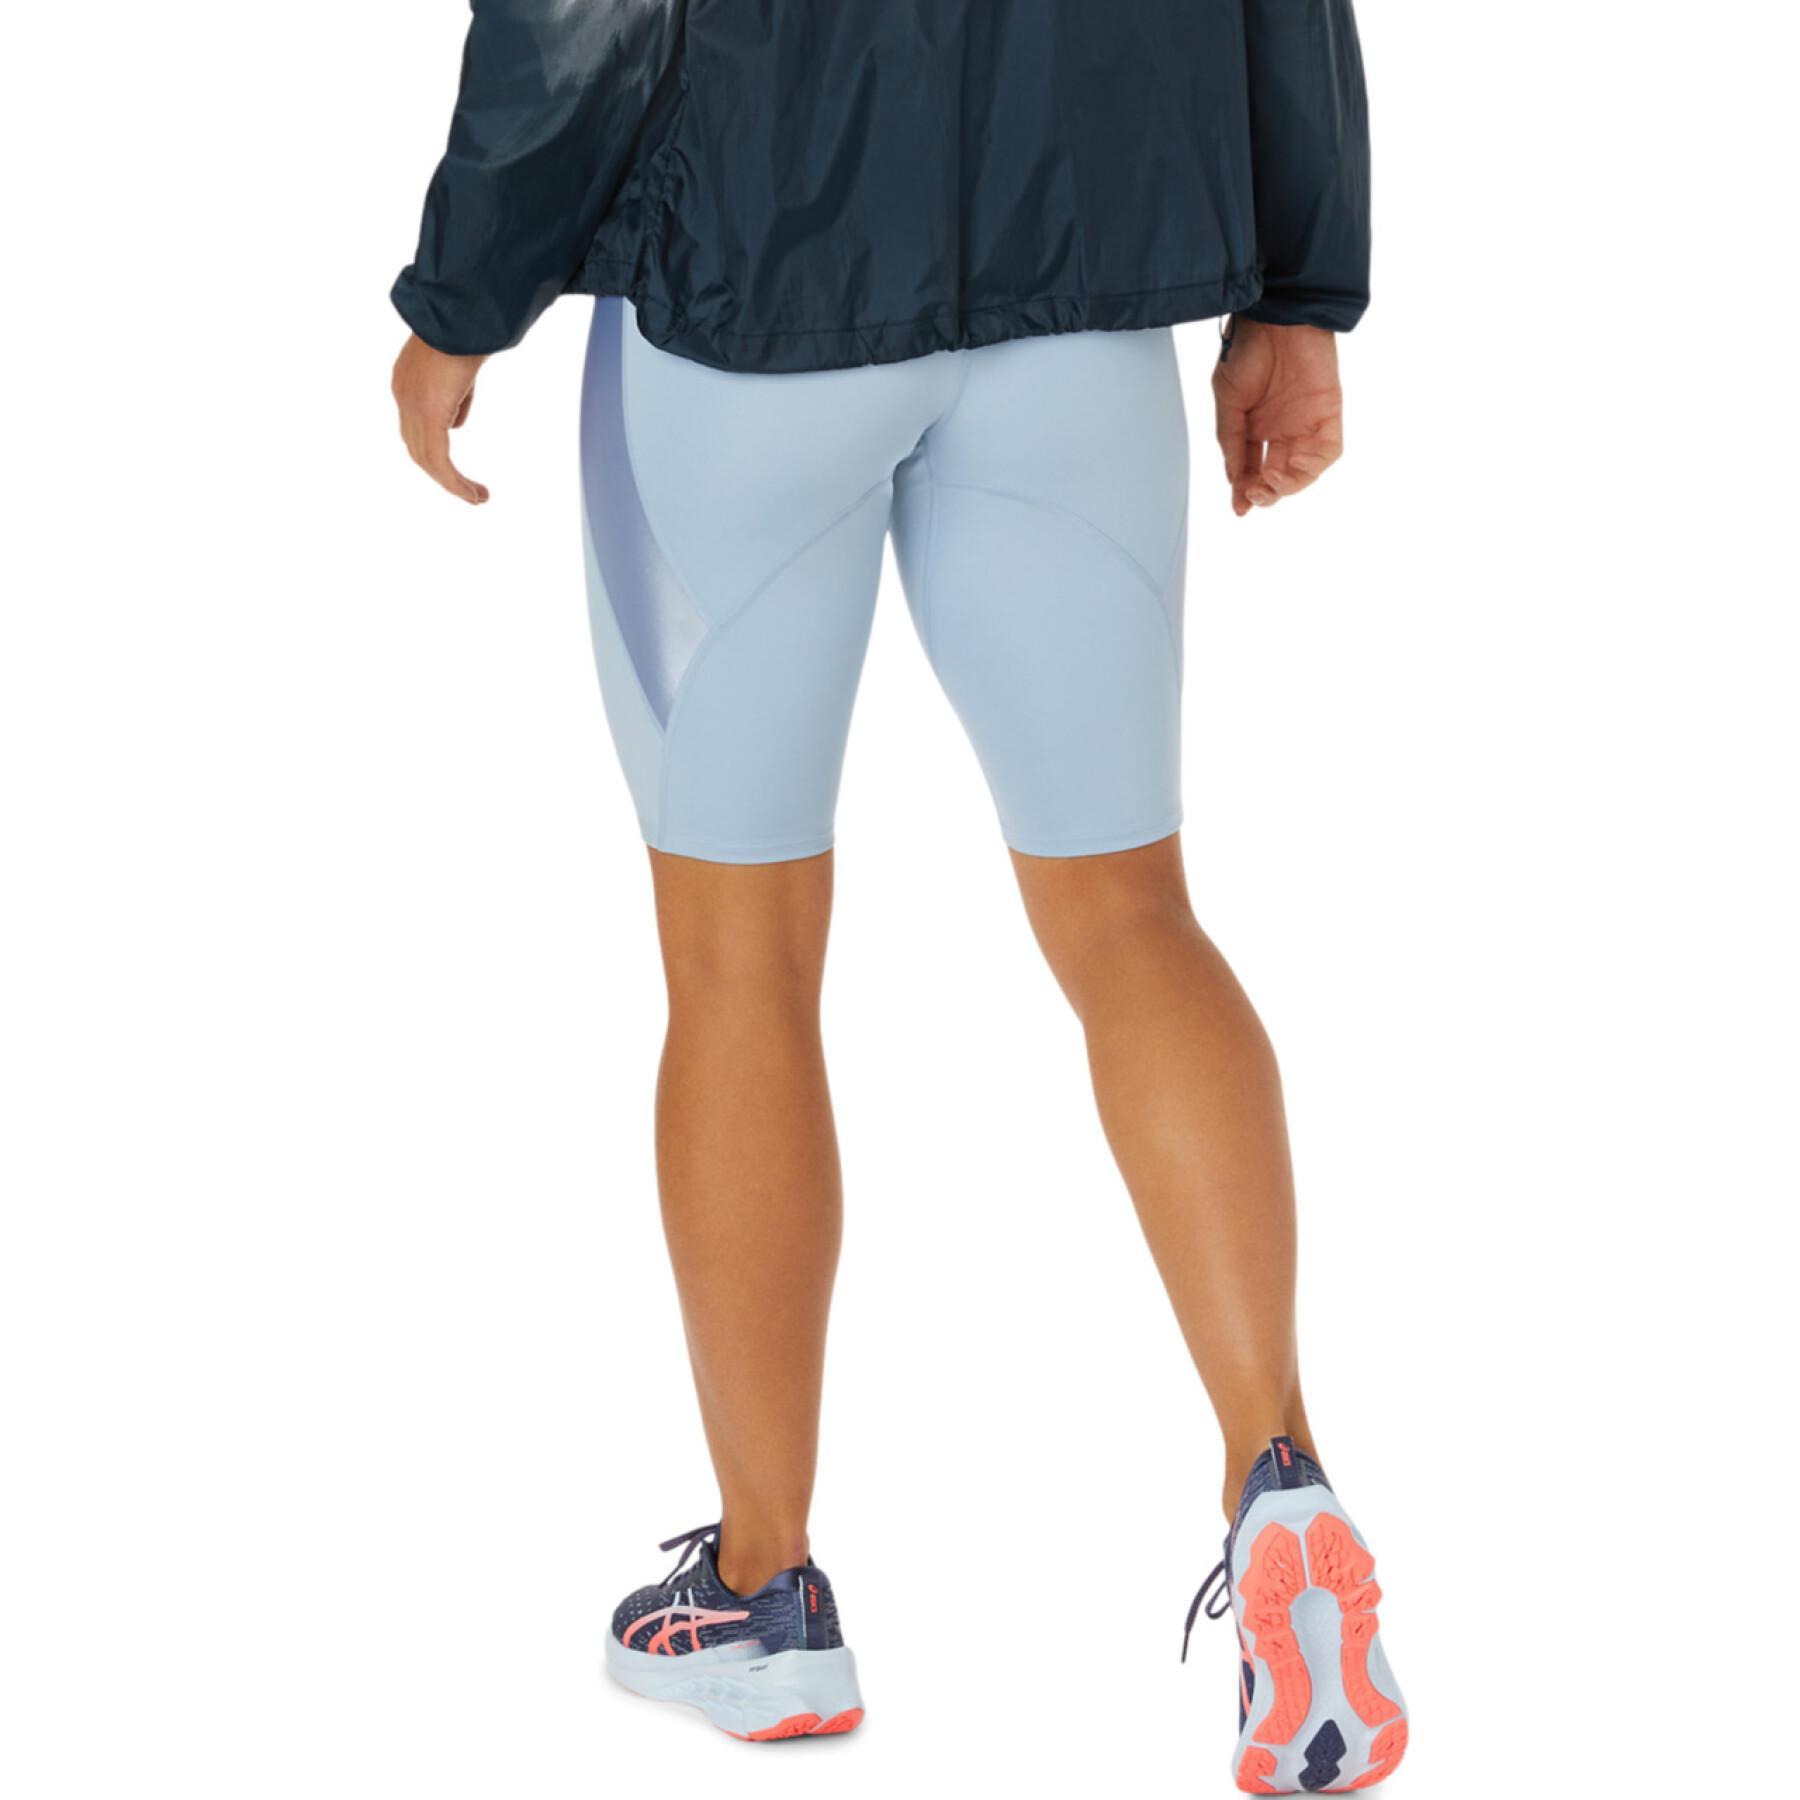 Women's compression shorts Asics Kasane Sprinter